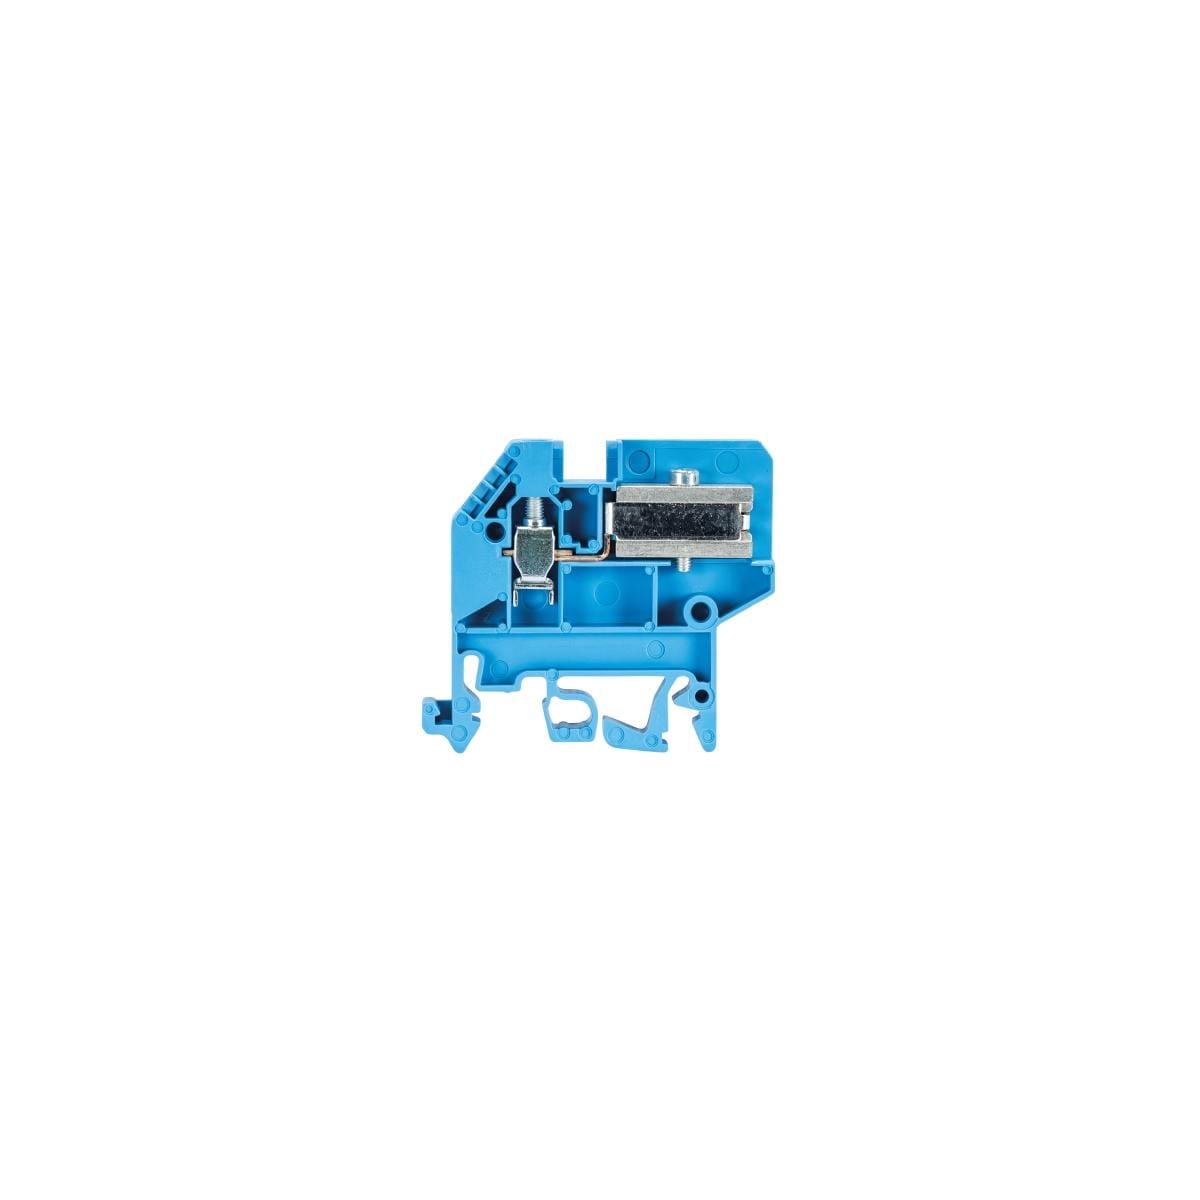 Wieland Electric NEUTRALLEITER-TRENNKLEMME WKN 4ETK/U/V0, blau  (57.504.8155.0) Elektroshop Wagner